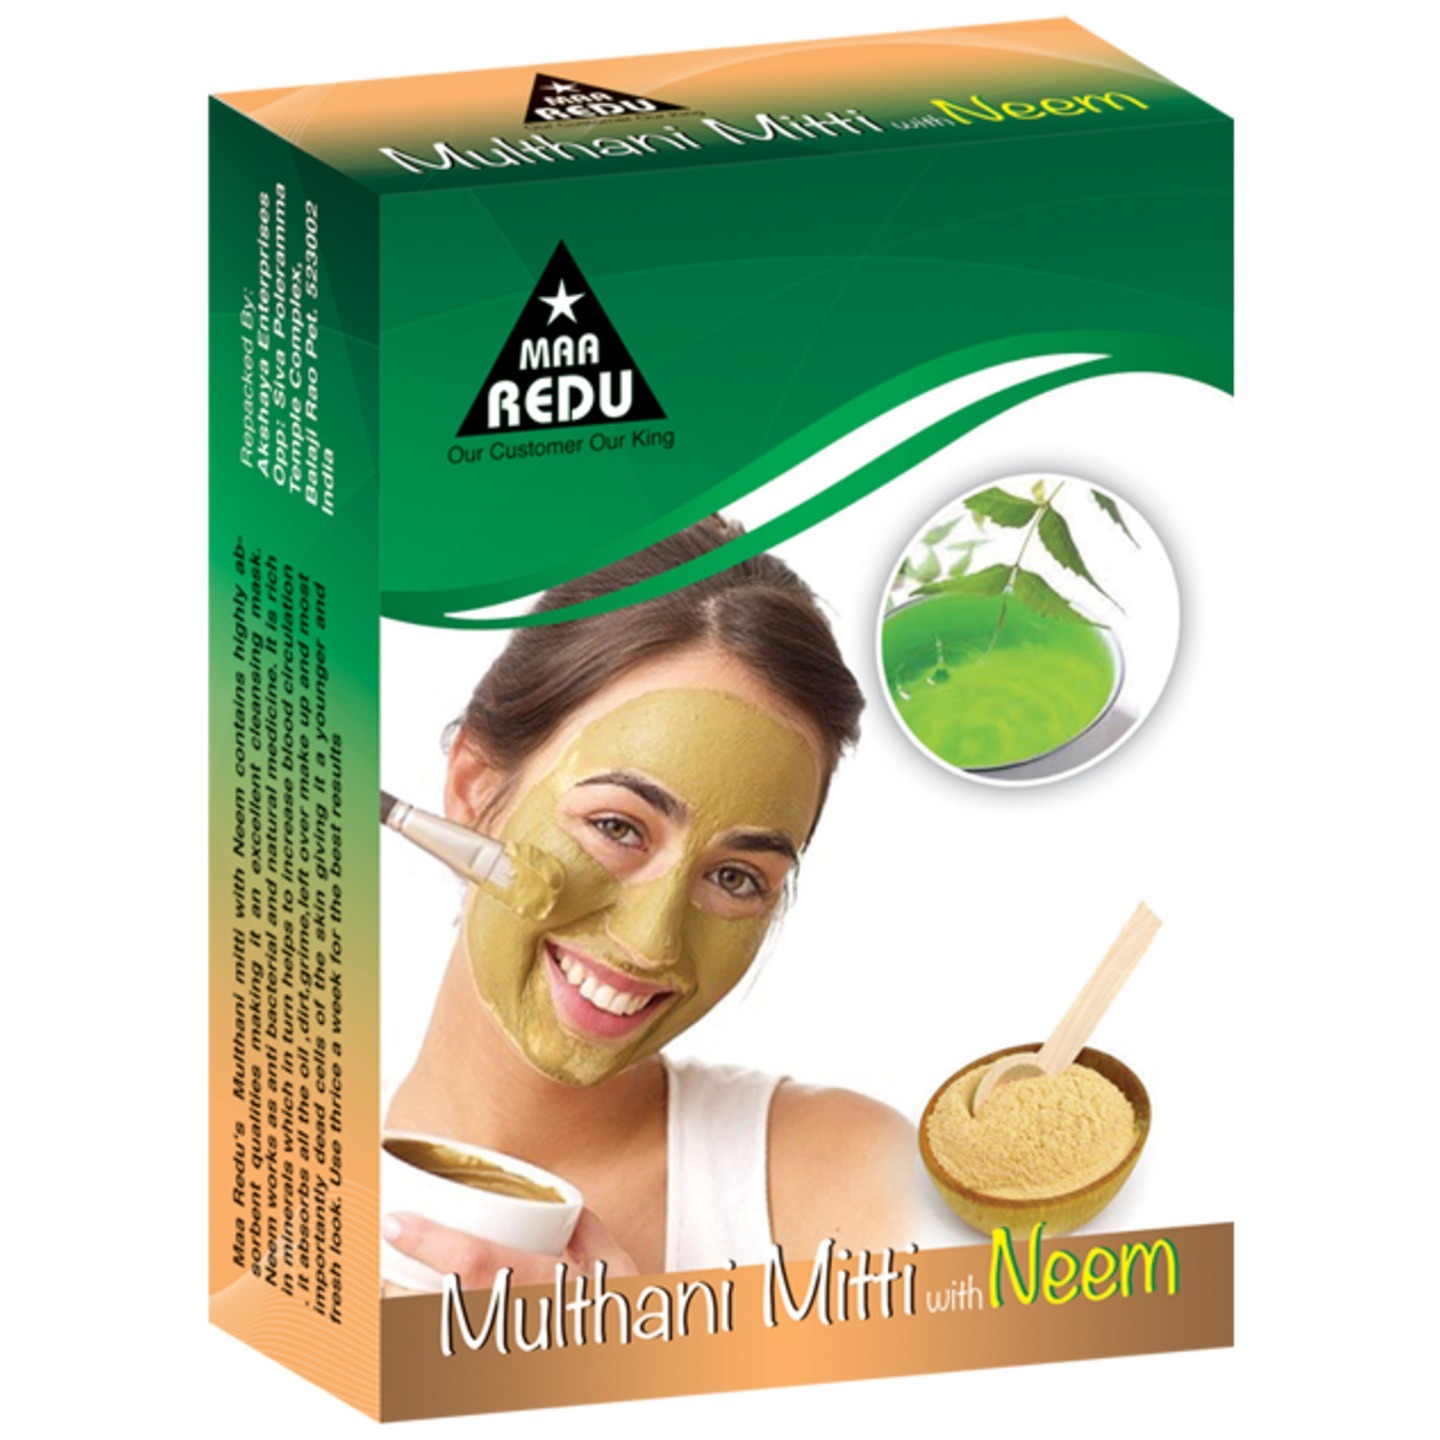 Maa Redu Multhani Mitti with Neem Powder Face Mask- 1 Case